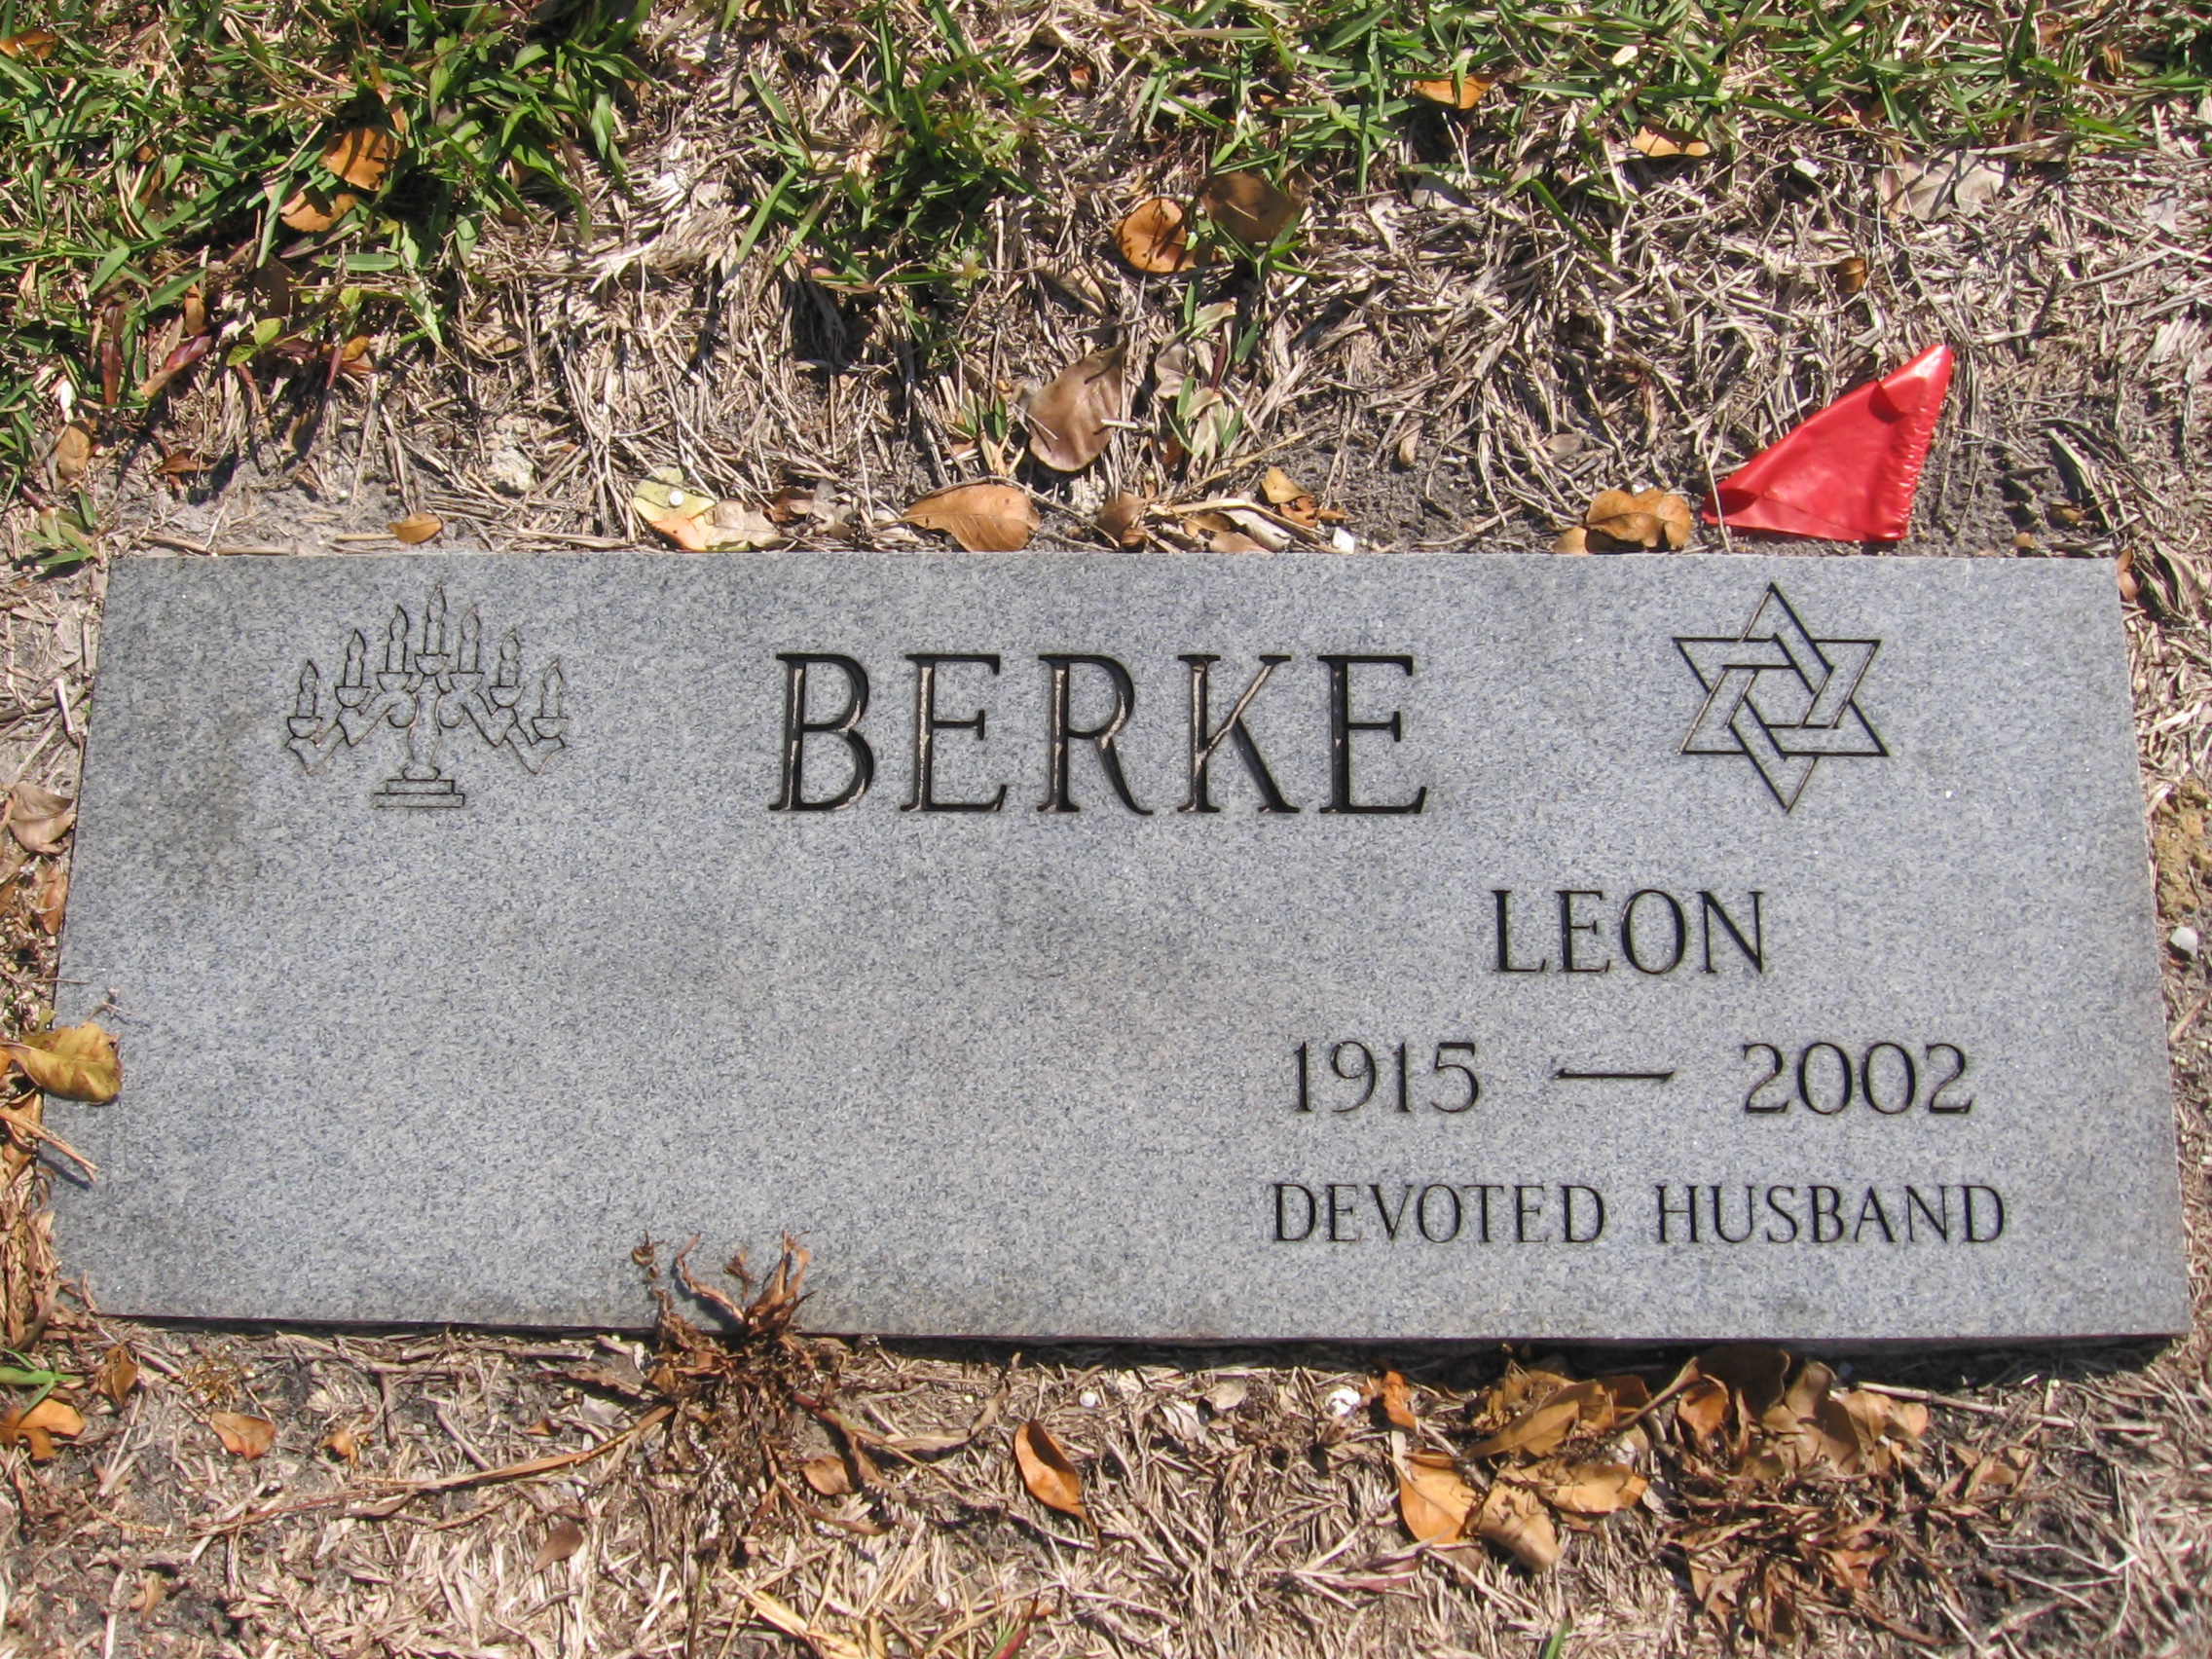 Leon Berke